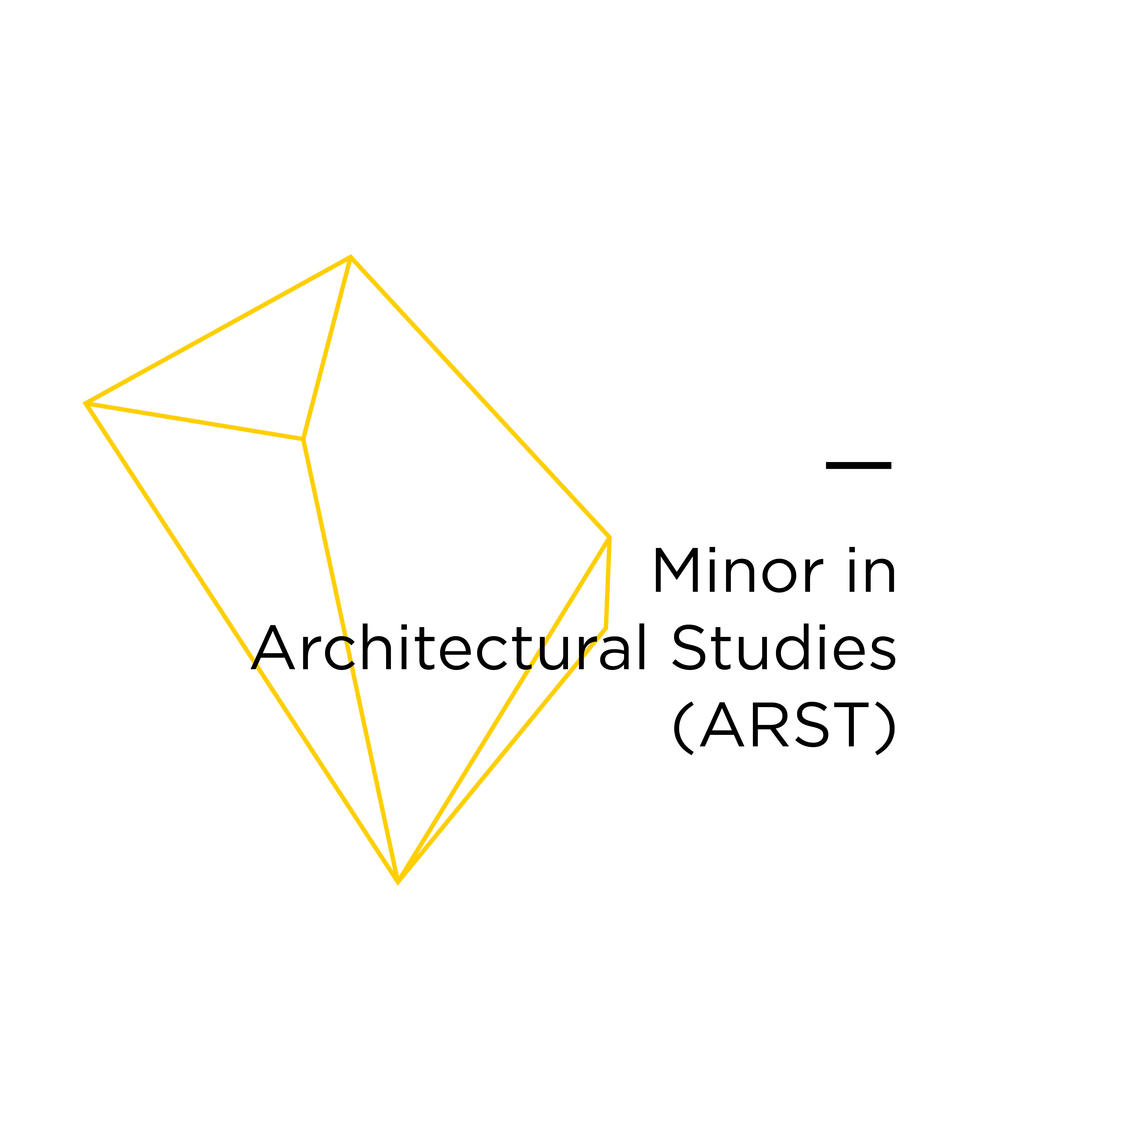 Minor in Architectural Studies (ARST)